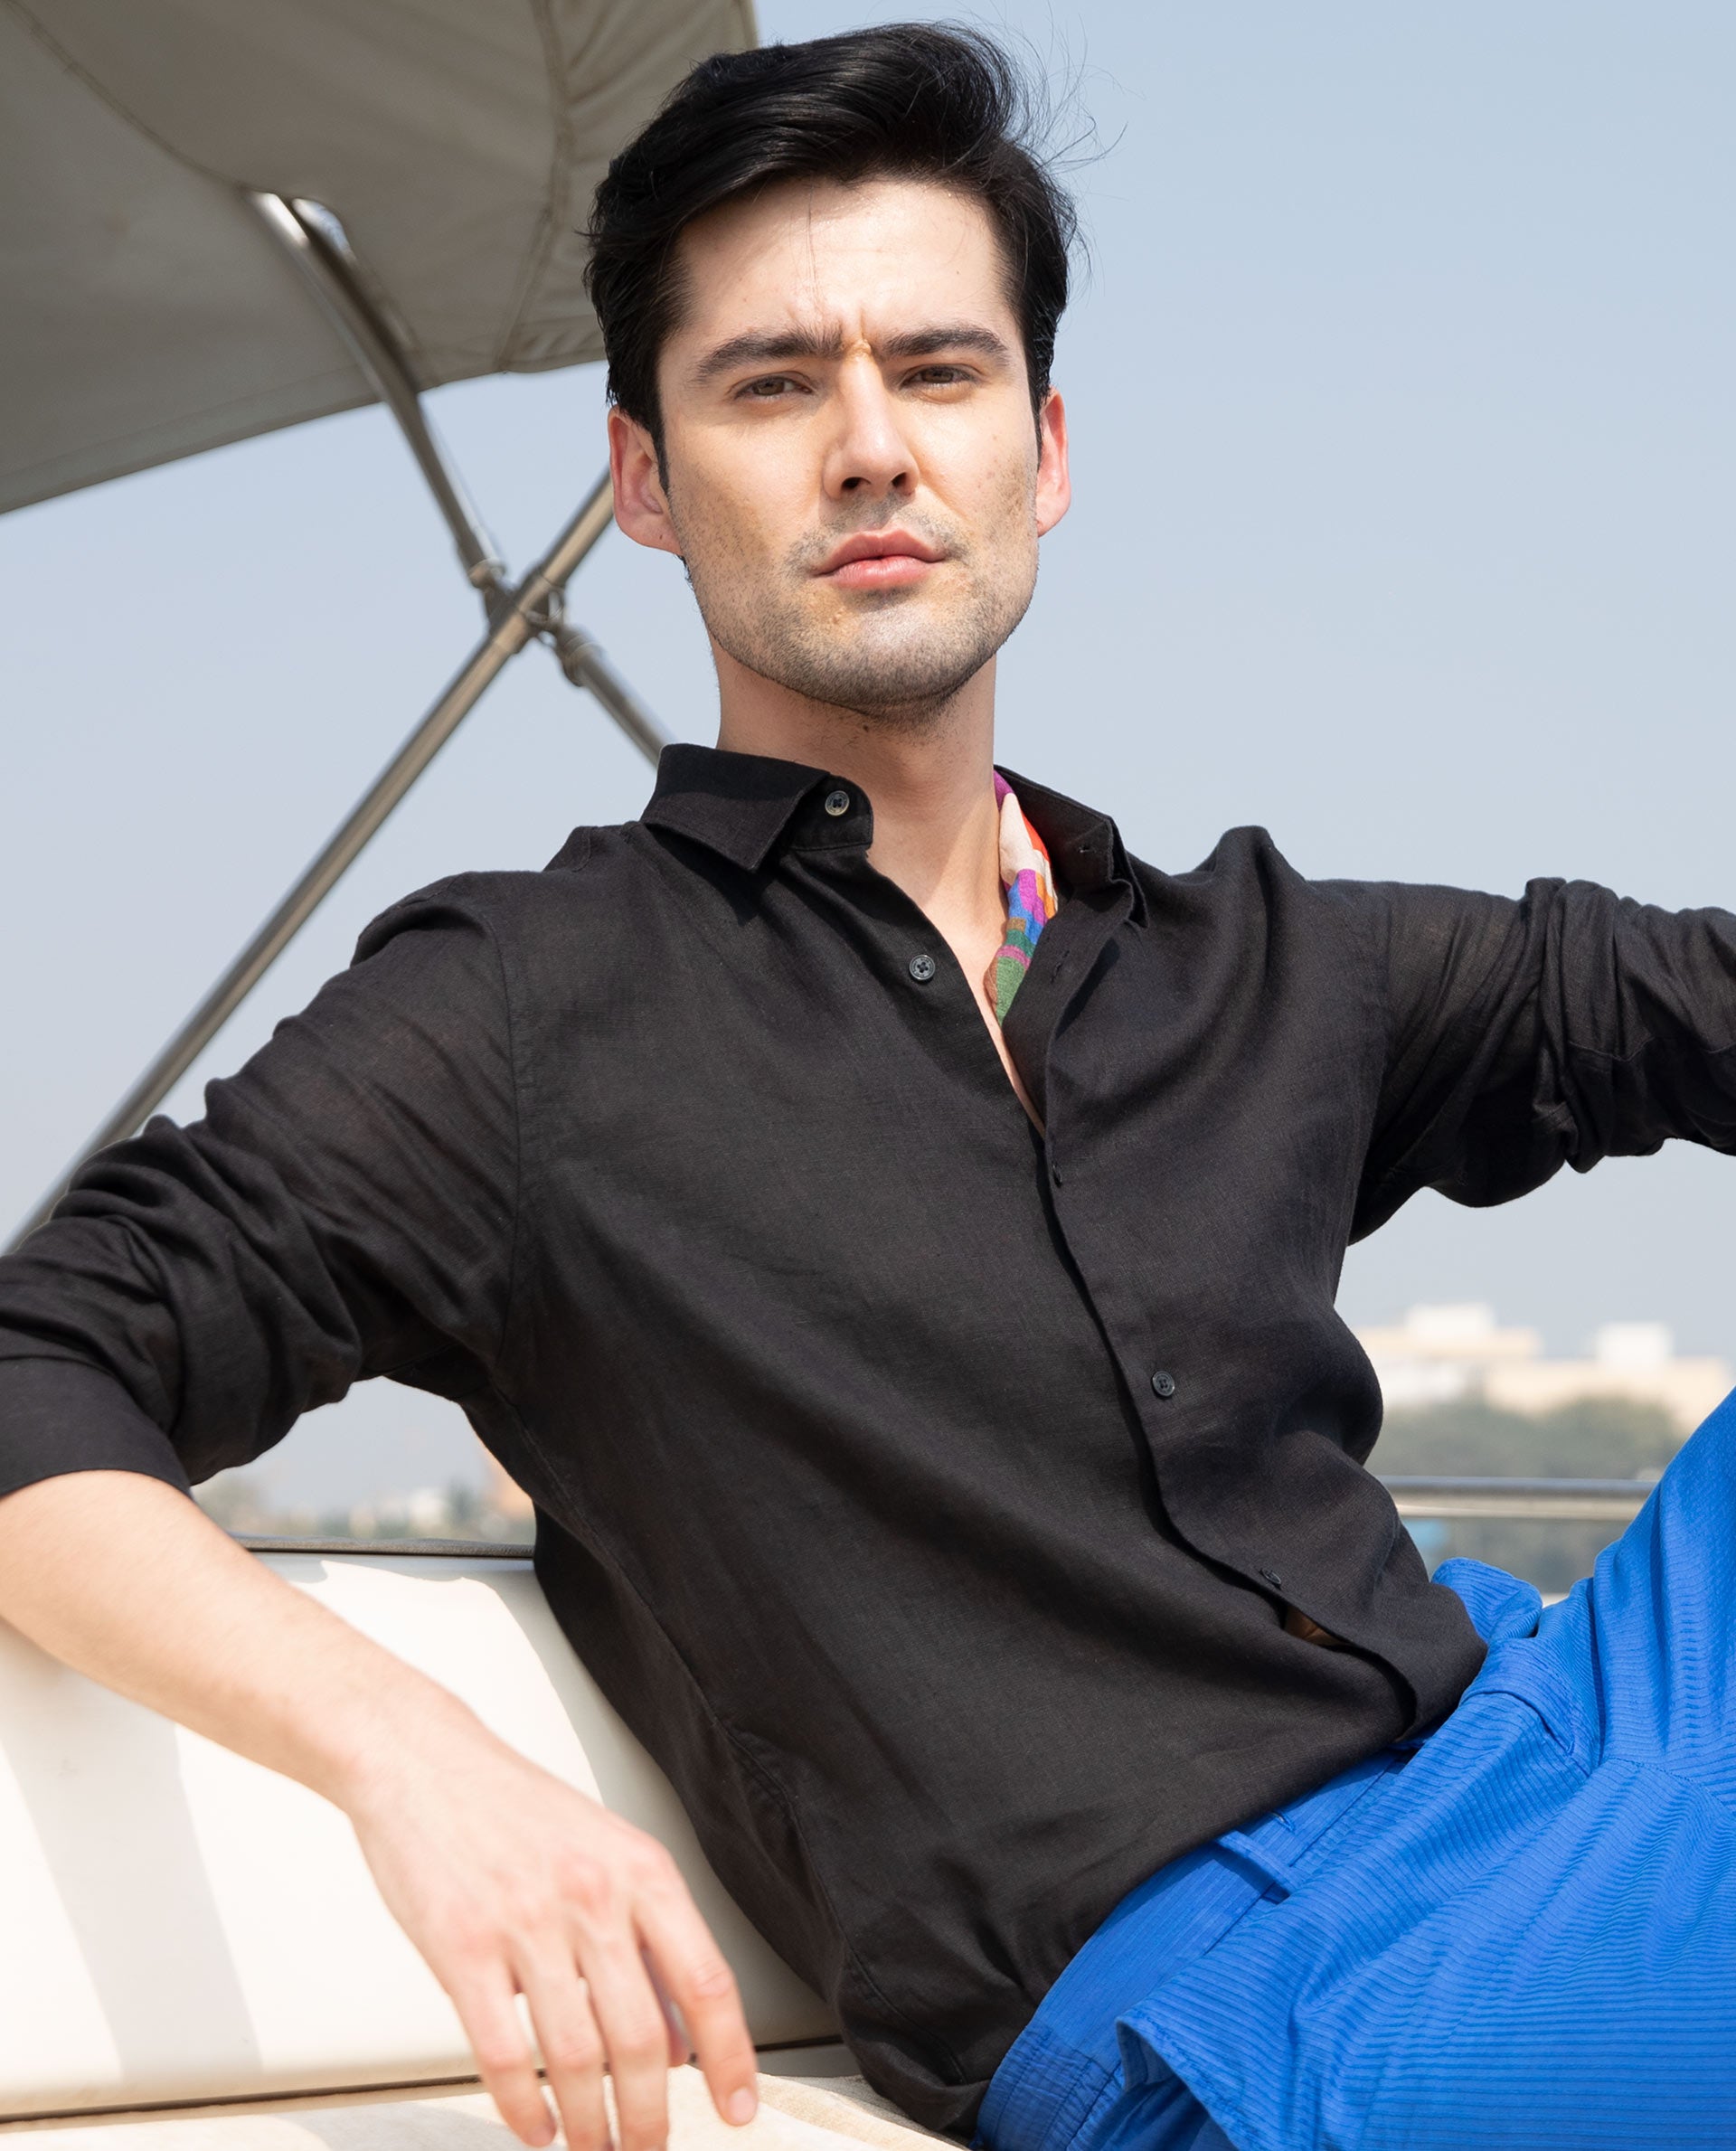 Man in blue dress shirt and black dress pants standing photo – Free Mens  fashion Image on Unsplash